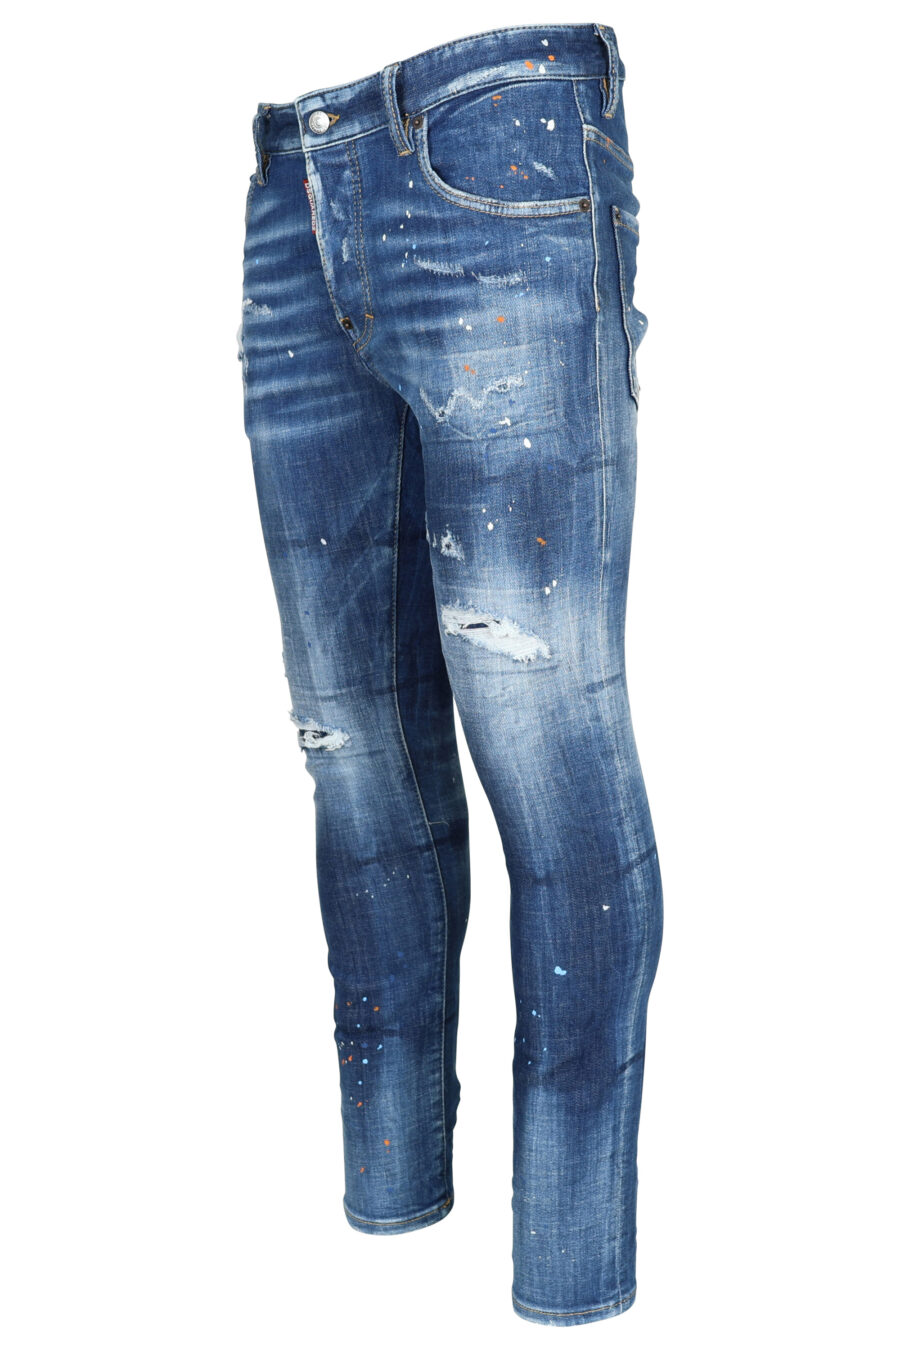 Pantalón vaquero azul "super twinky" desgastado con rotos - 8054148473228 1